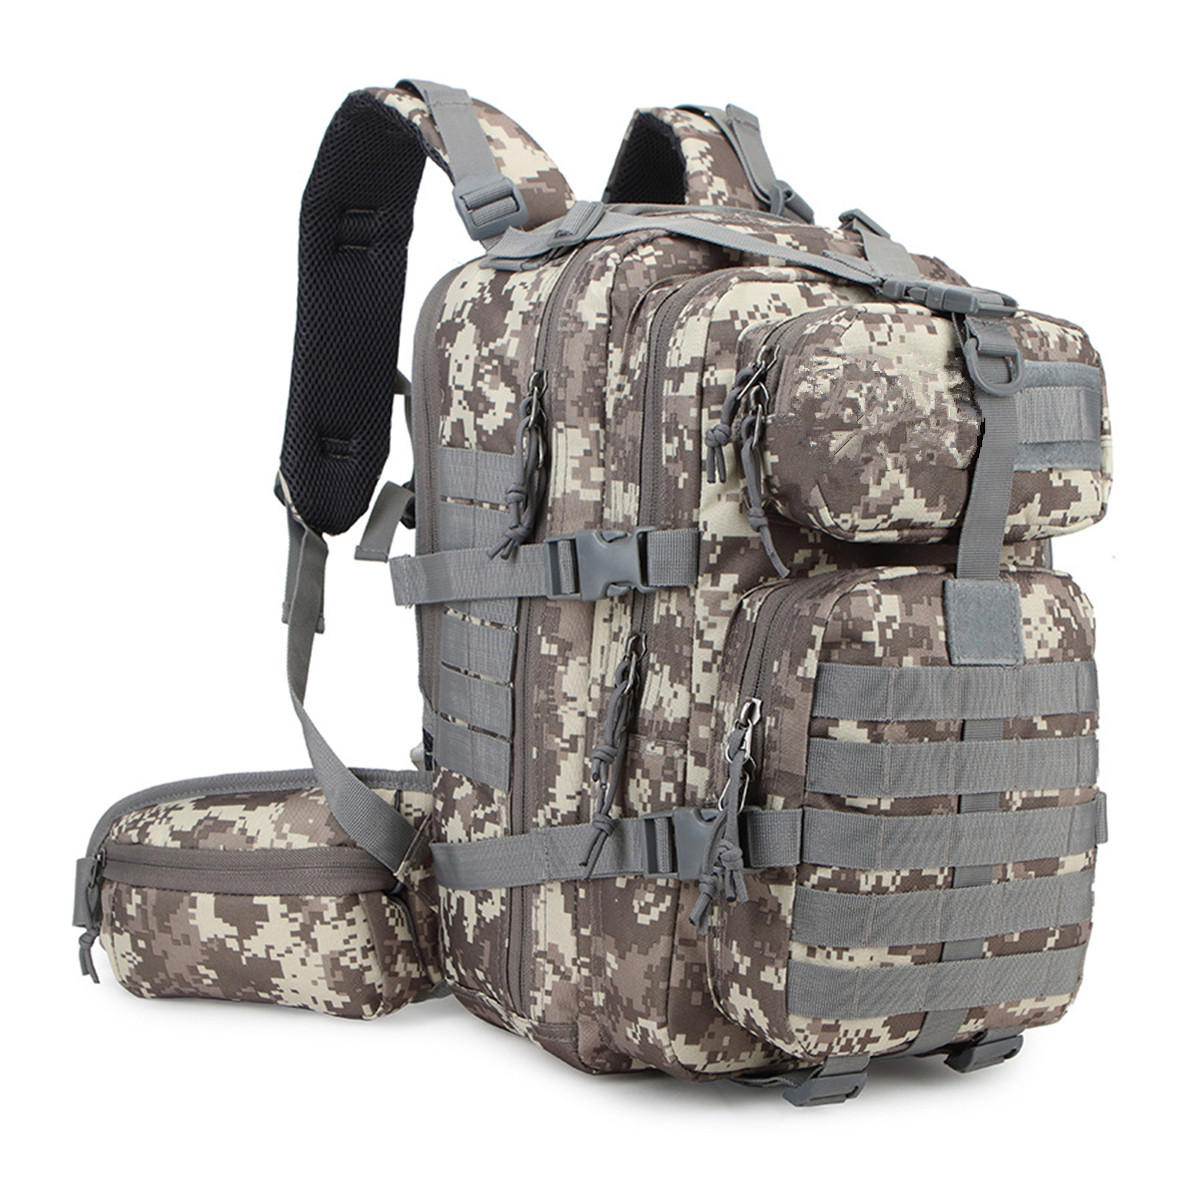 35L Military Tactical Bag Army Backpack Rucksack Outdoor Camping Hiking Trekking Bag